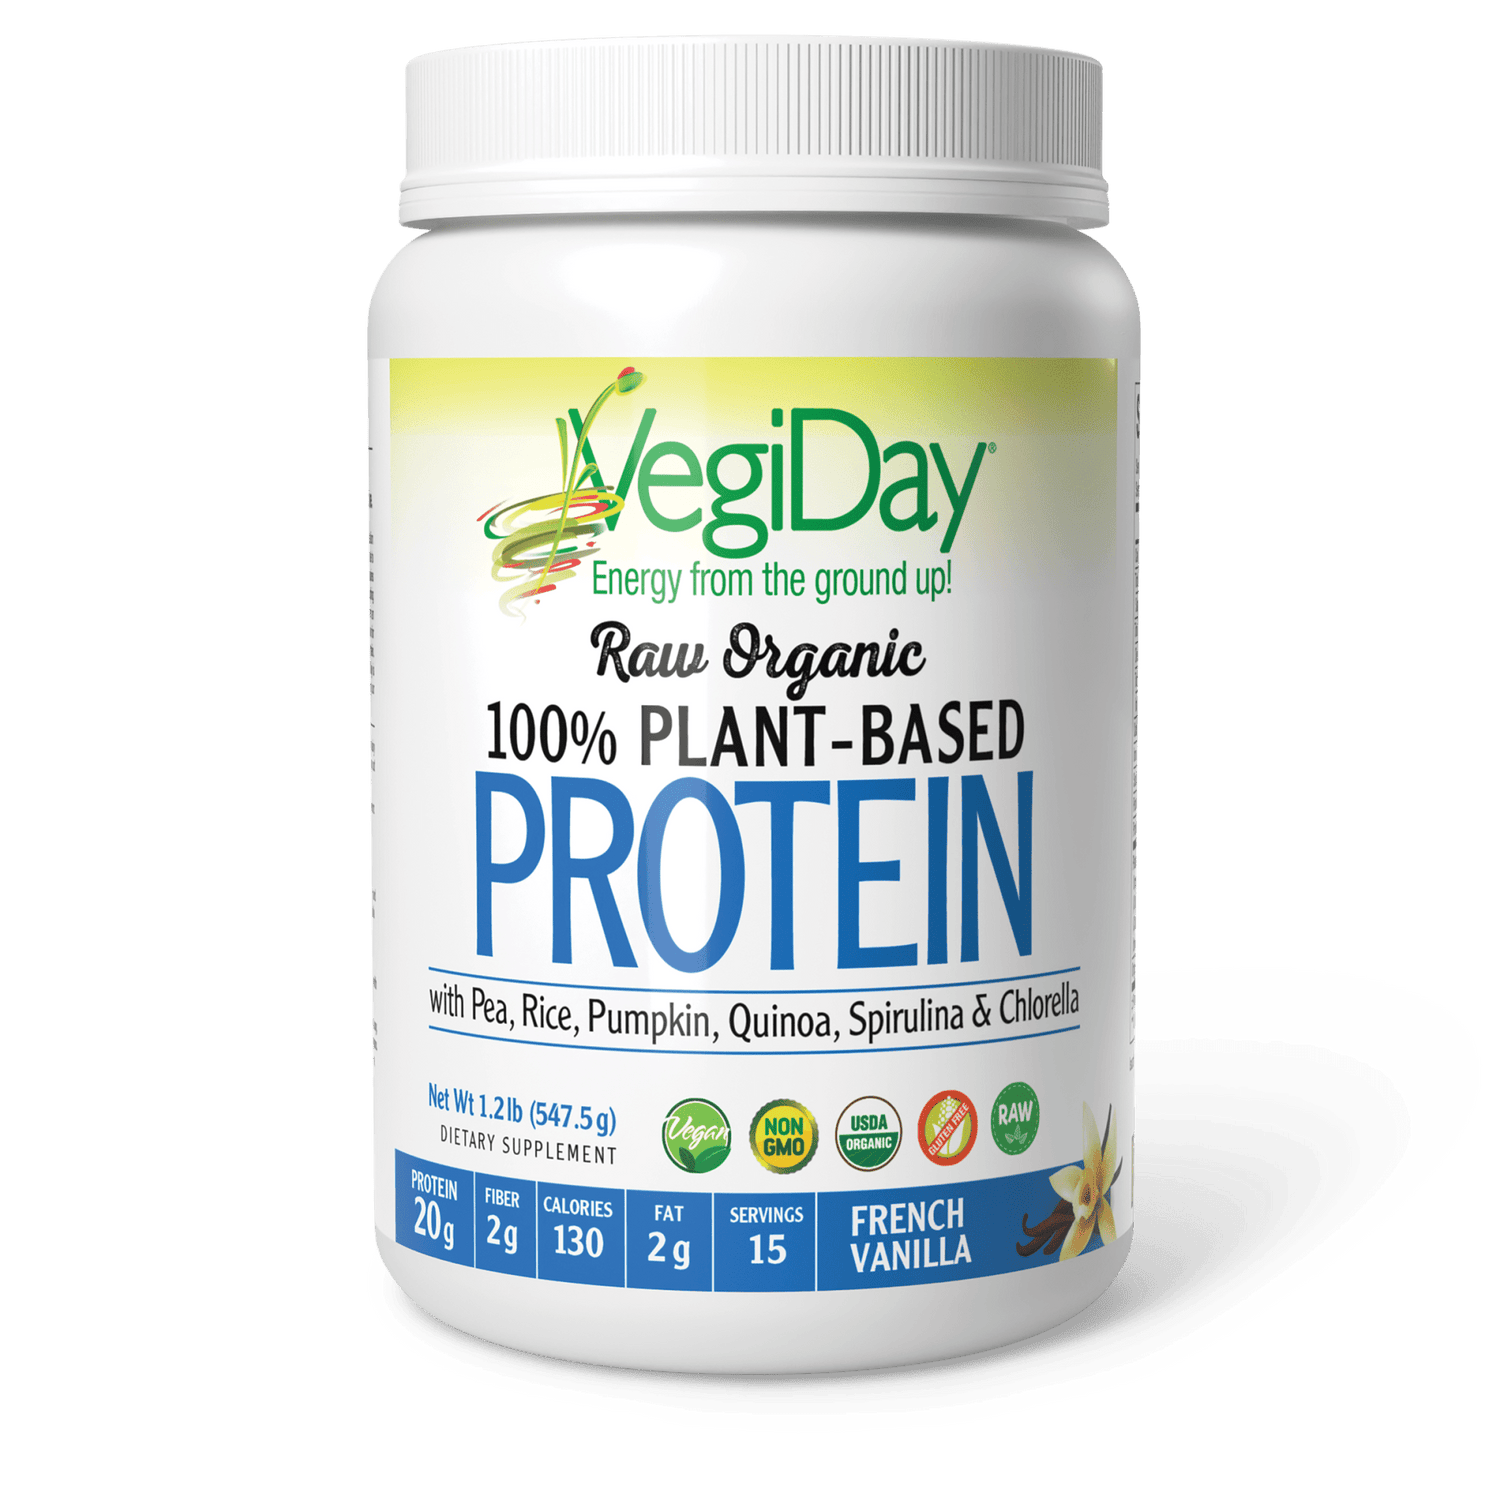 Raw Organic 100% Plant-Based Protein|variant|hi-res|2948U